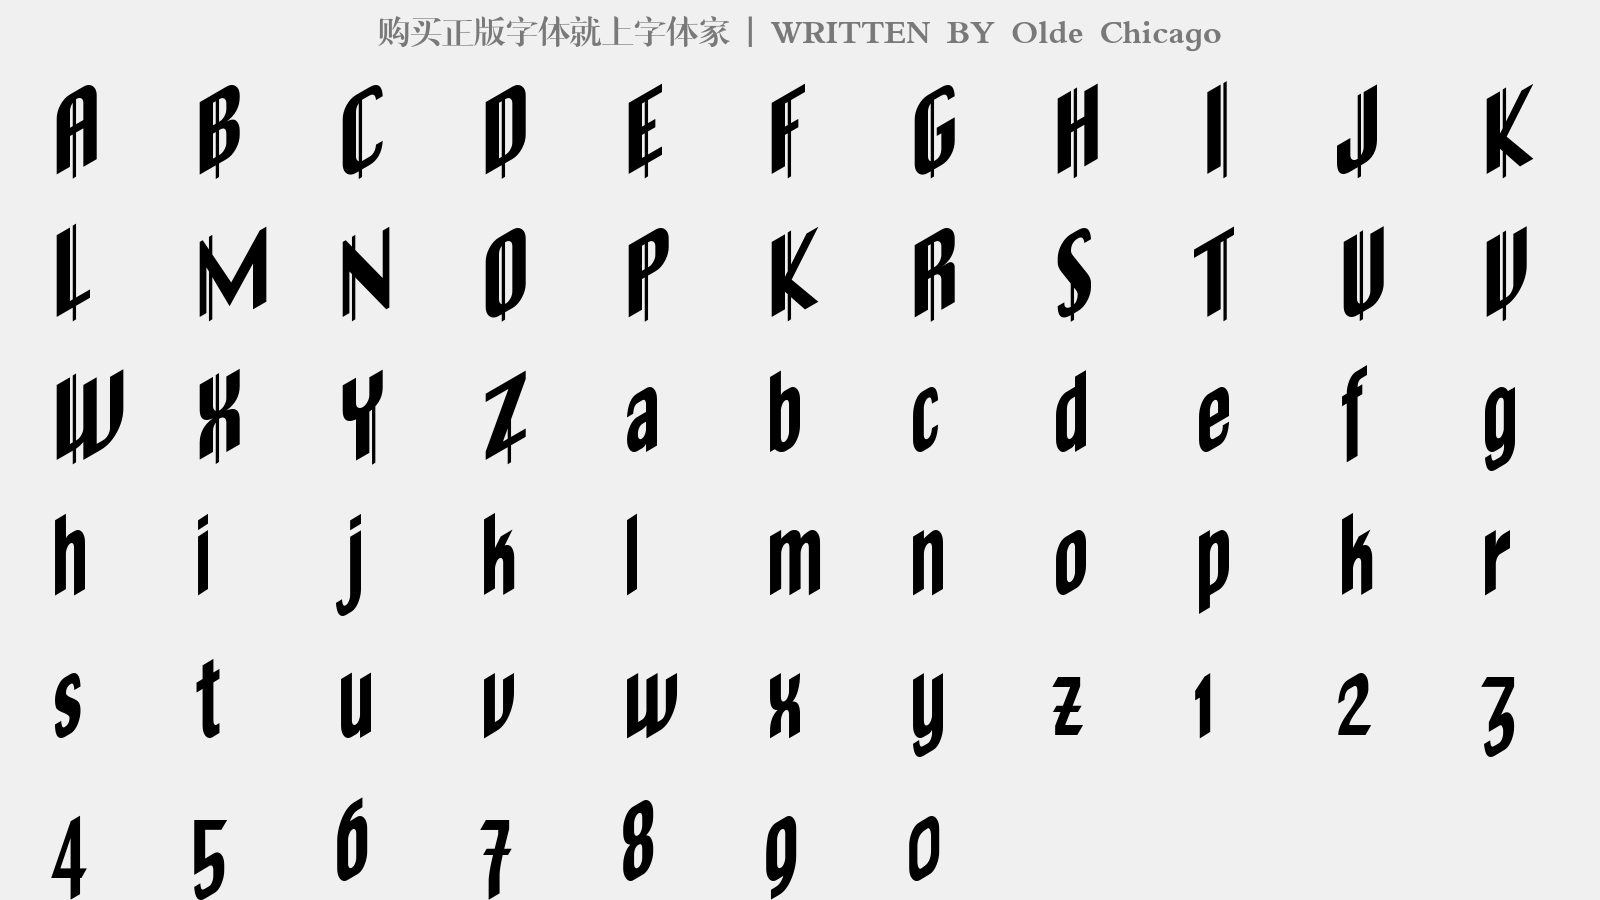 Olde Chicago - 大写字母/小写字母/数字